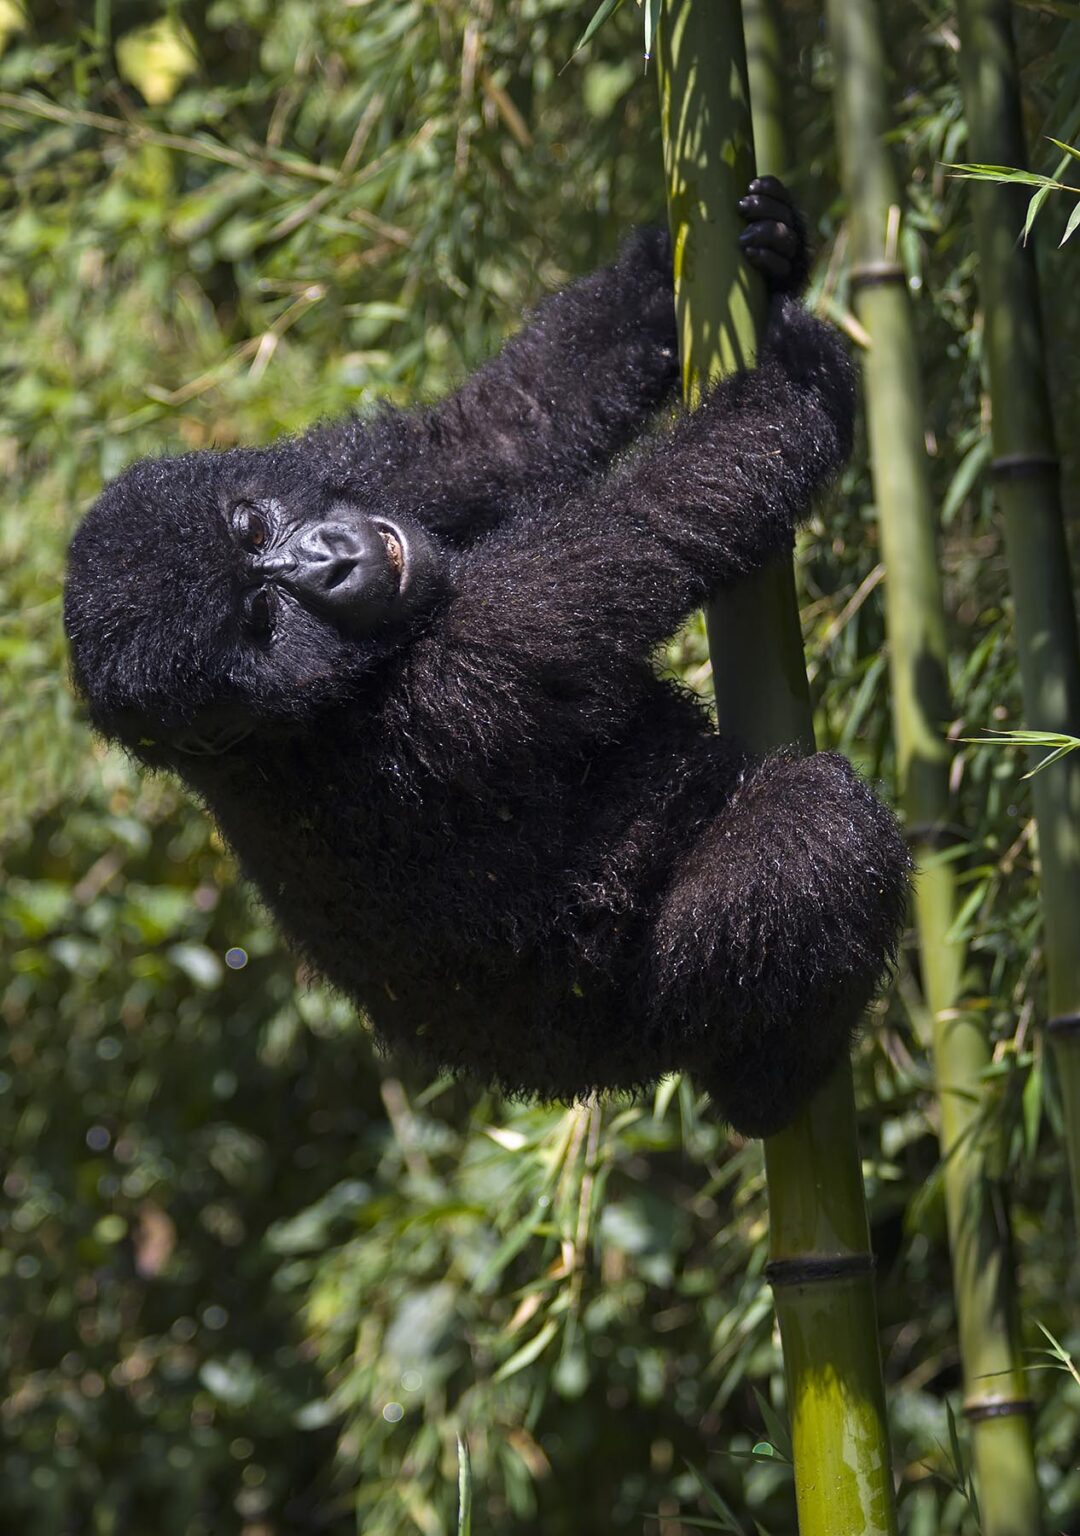 A baby MOUNTAIN GORILLA (Gorilla beringei beringei) climbs bamboo in the PARK NATIONAL DE VOLCANS or VOLCANOES NATIONAL PARK - RWANDA, AFRICA